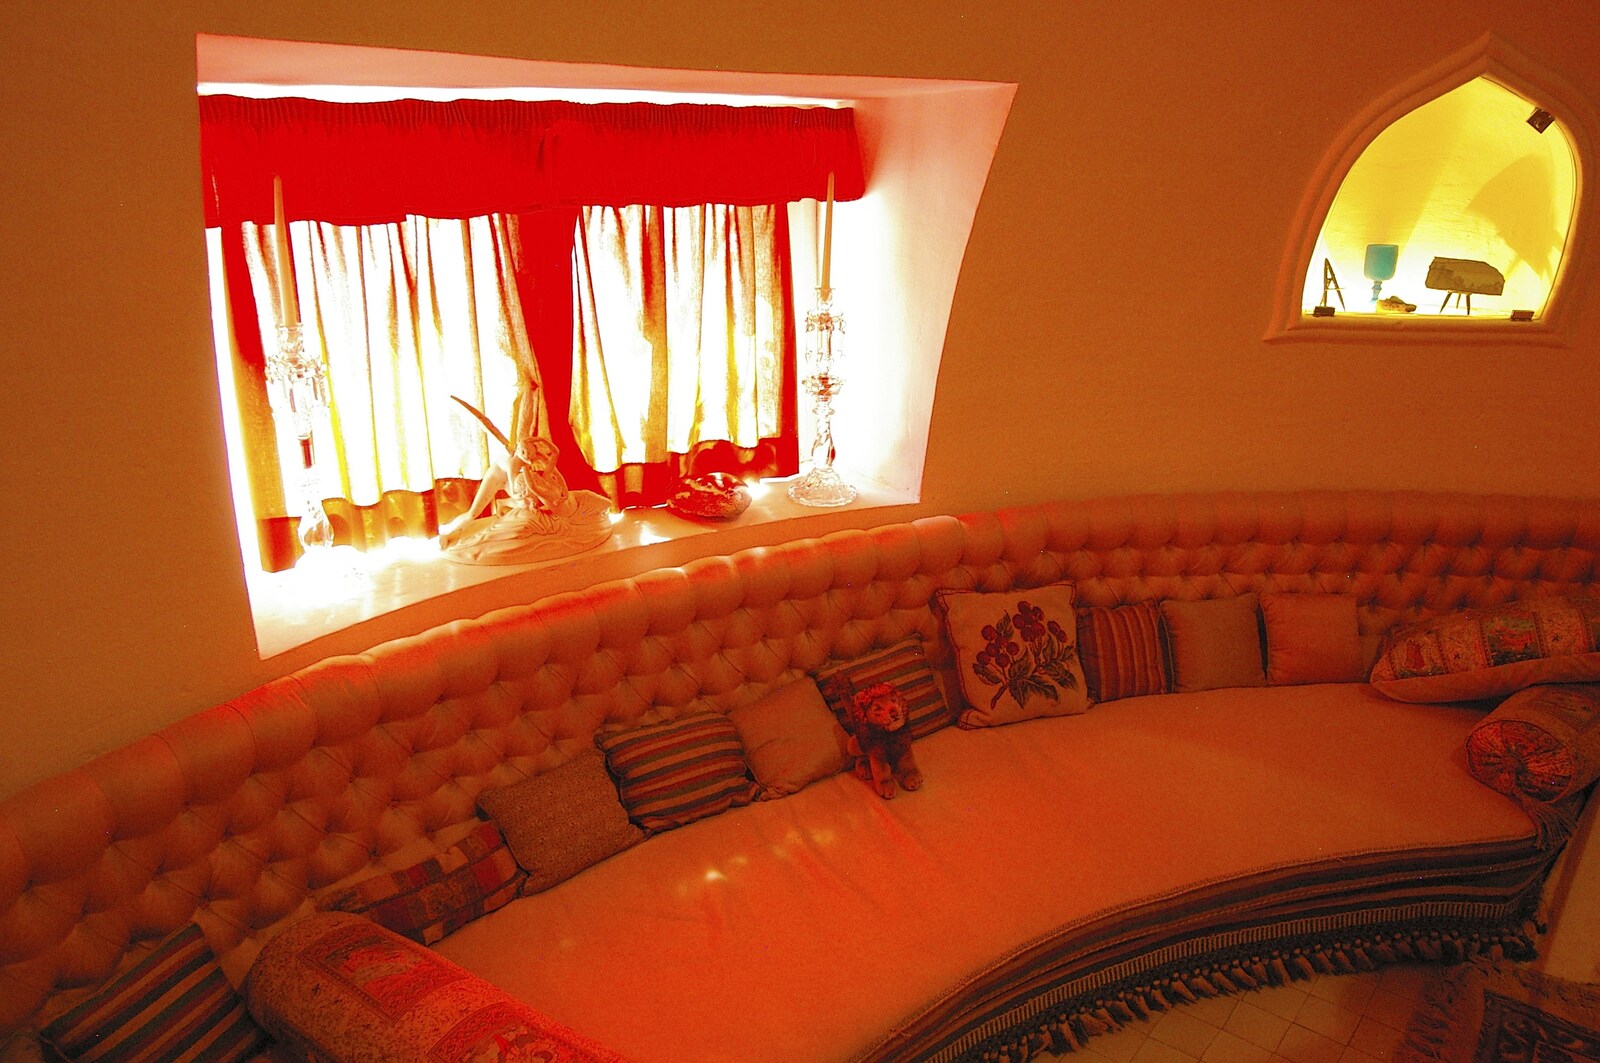 An orange boudoir from Salvador Dalí's House, Port Lligat, Spain - 19th Deptember 2006